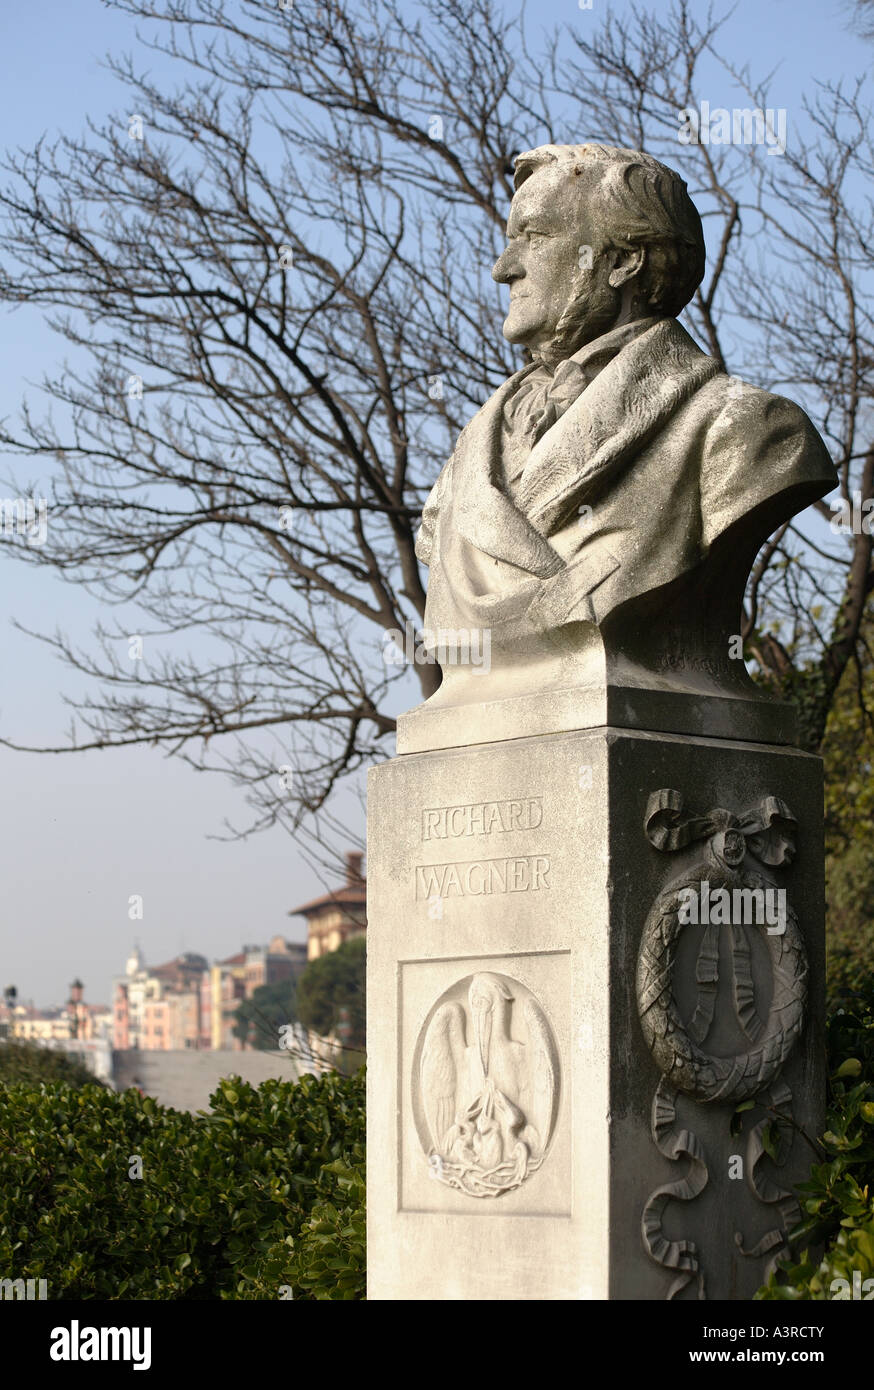 Statue of Richard Wagner in public gardens. Castello, Venice, Italy Stock Photo